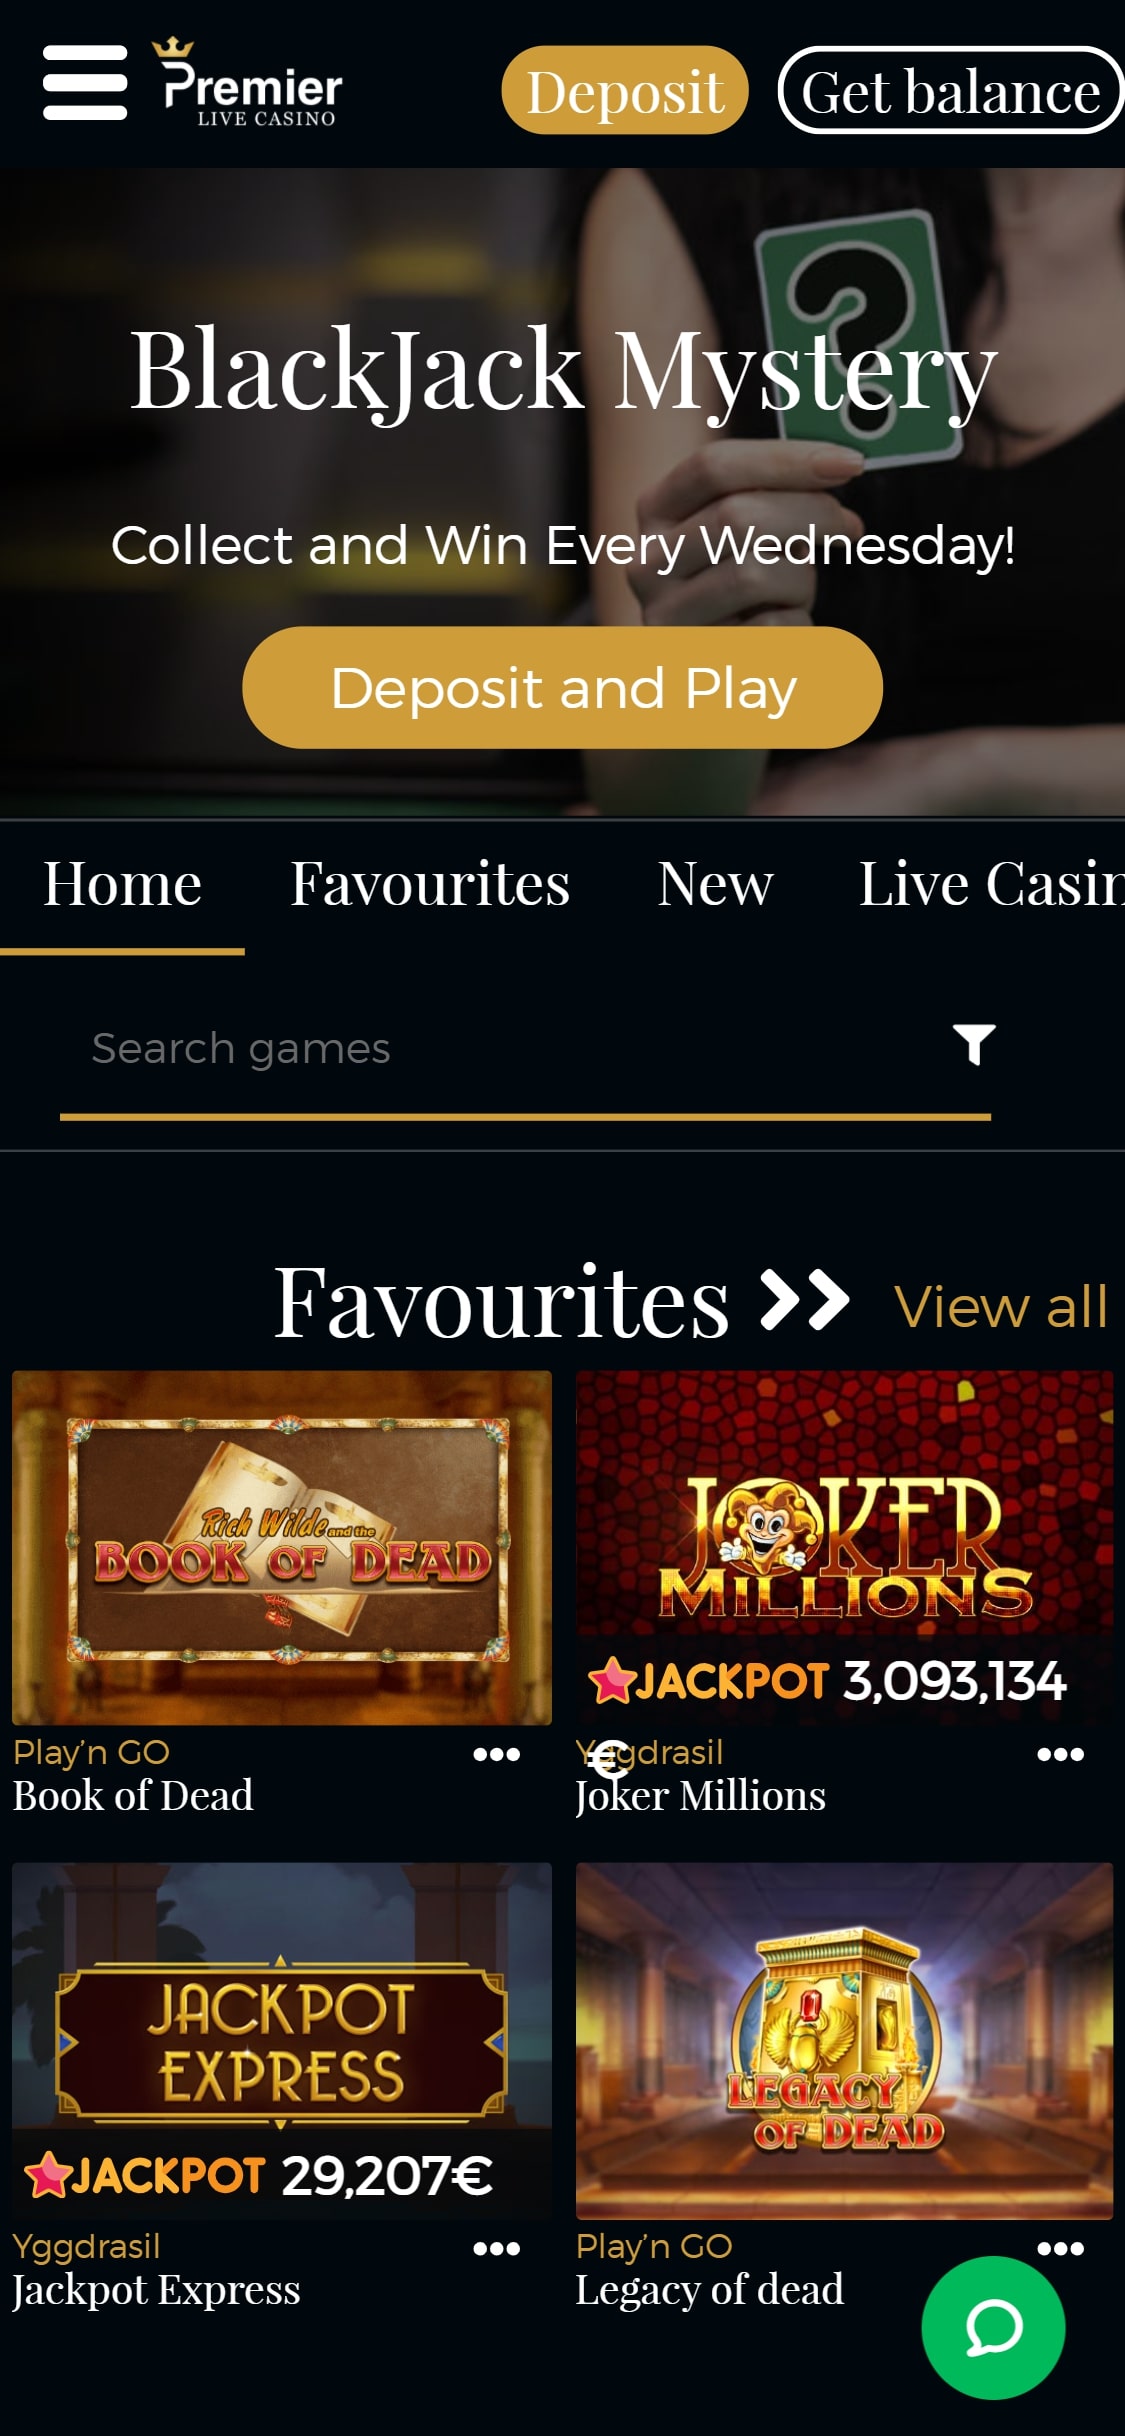 Premier Live Casino Mobile Review